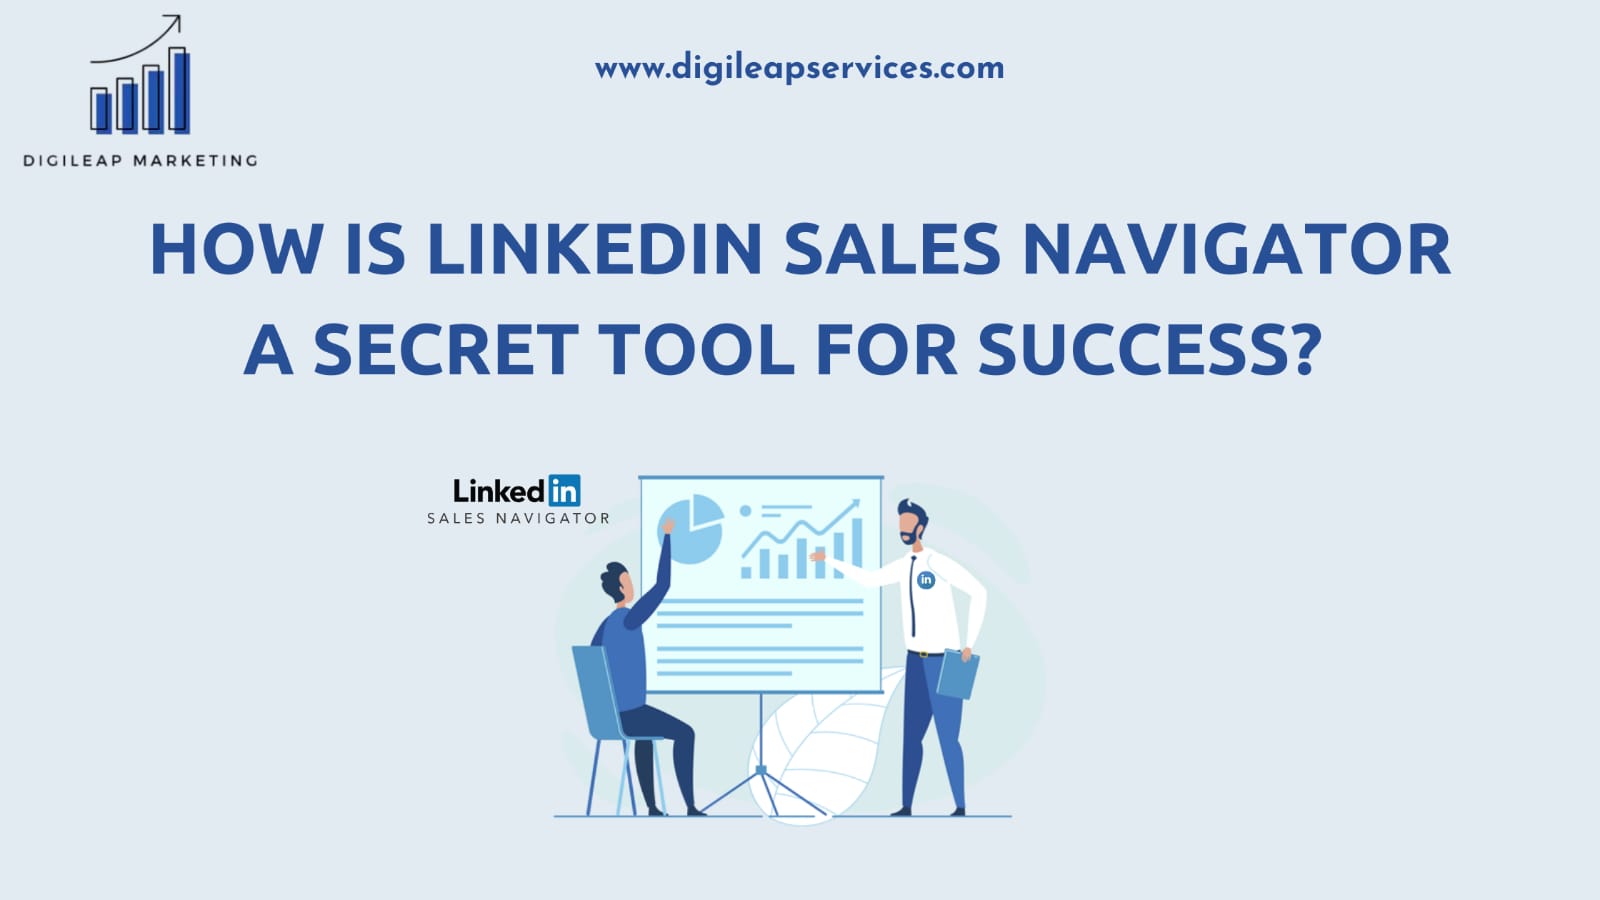 Digital marketing, Digileap, Linkedin sales navigator, sales navigator